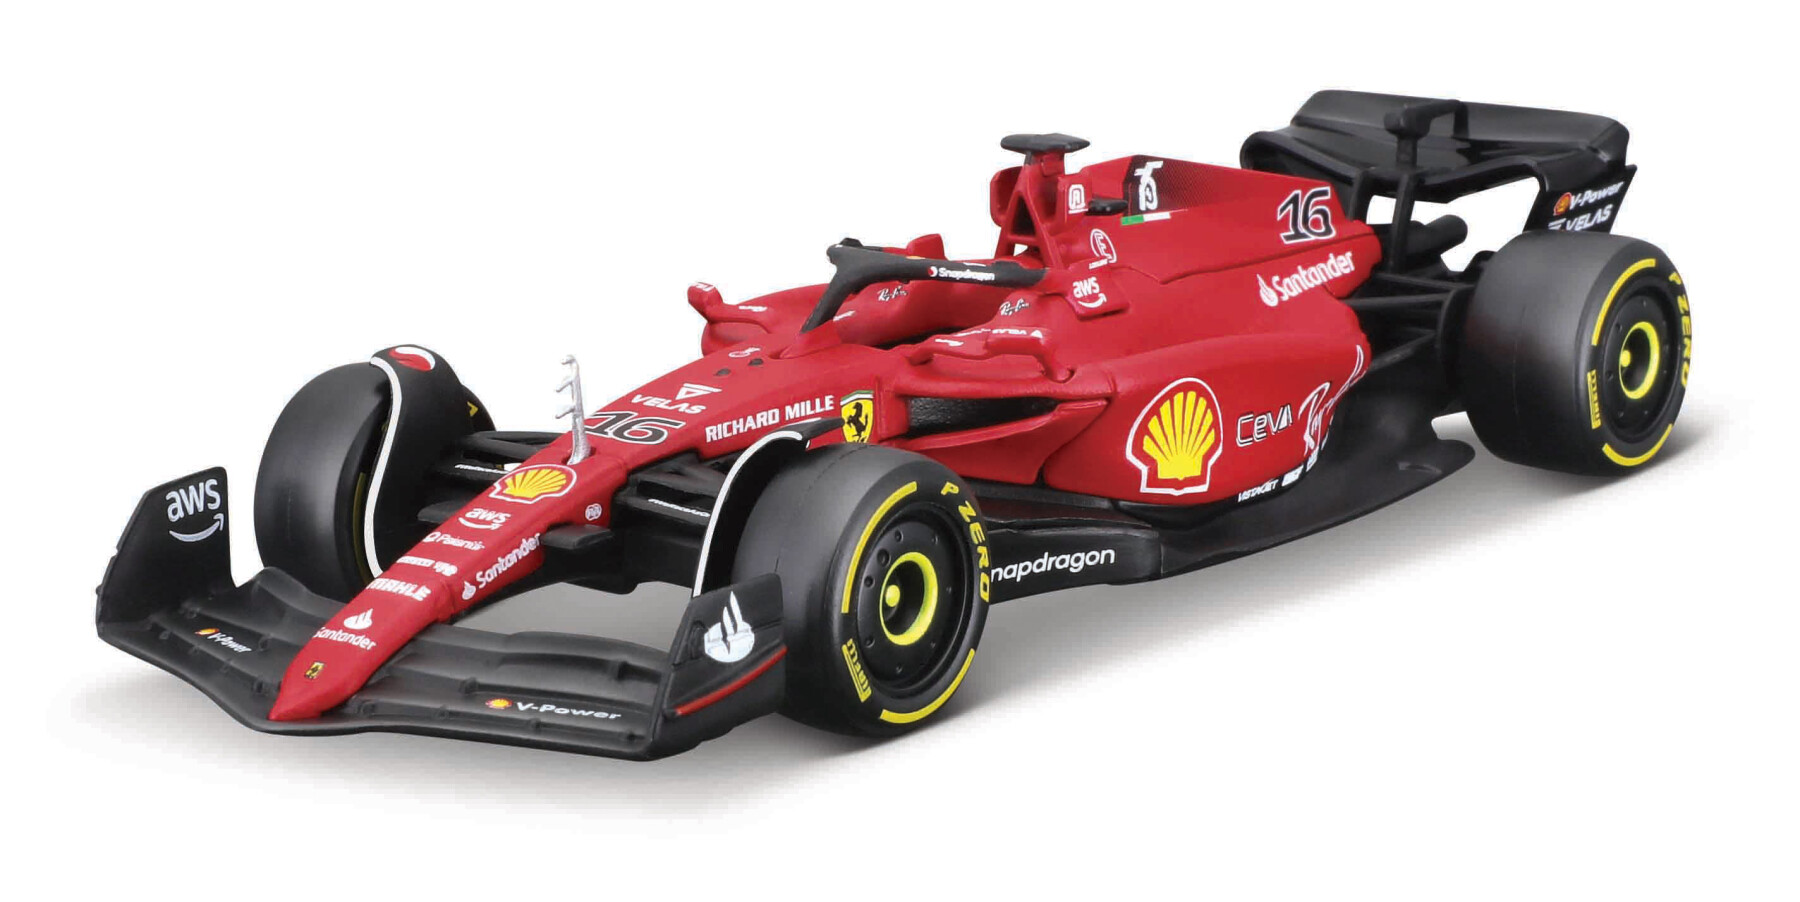 Ferrari f1-75 #16 leclerc -1:43 - Toys Center